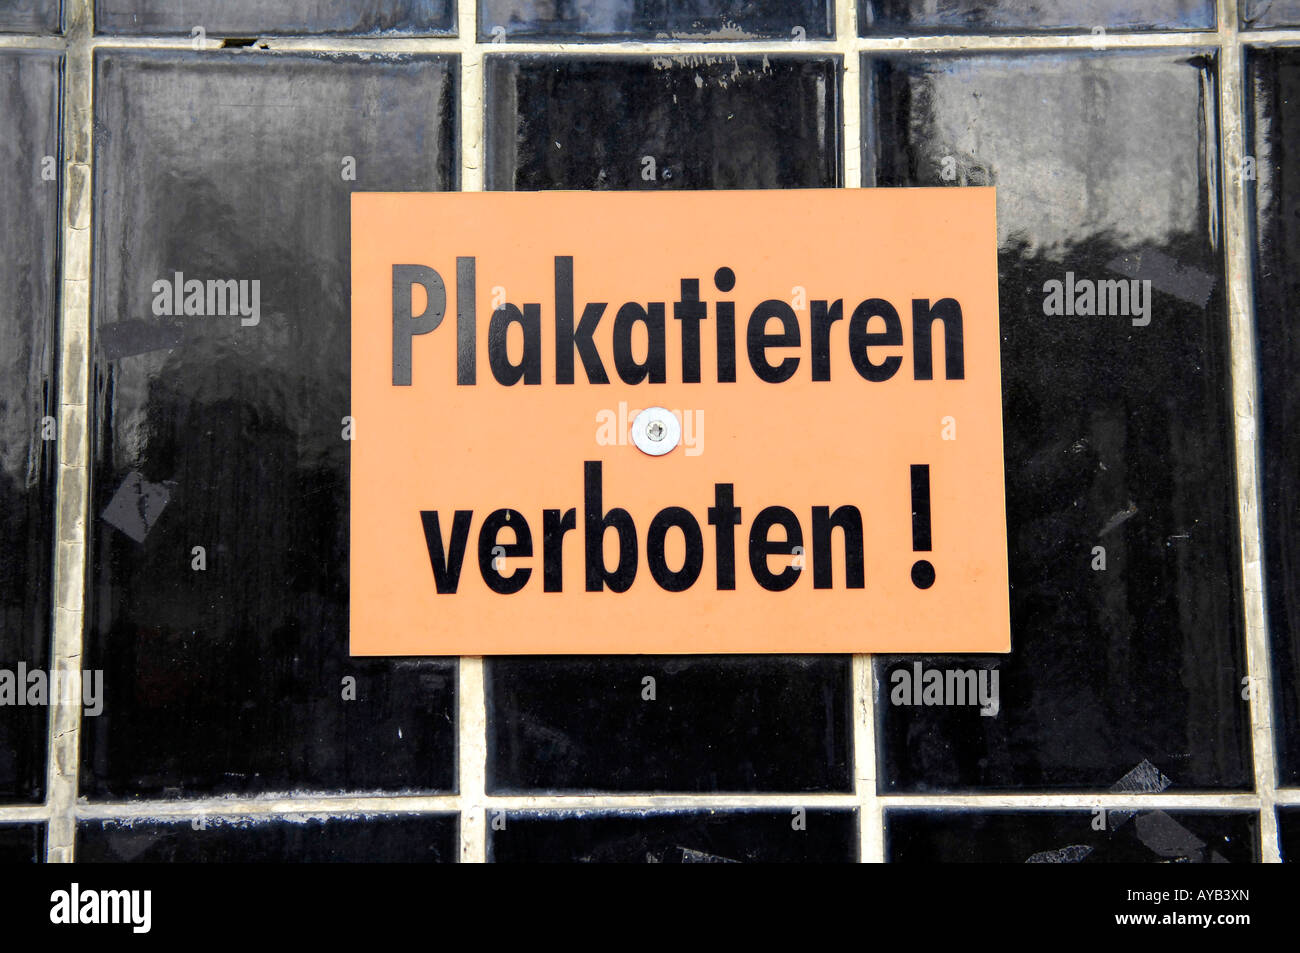 plakatieren verboten bill posters prohibited german deustchland orange black tiled wall street urban law regulations Stock Photo